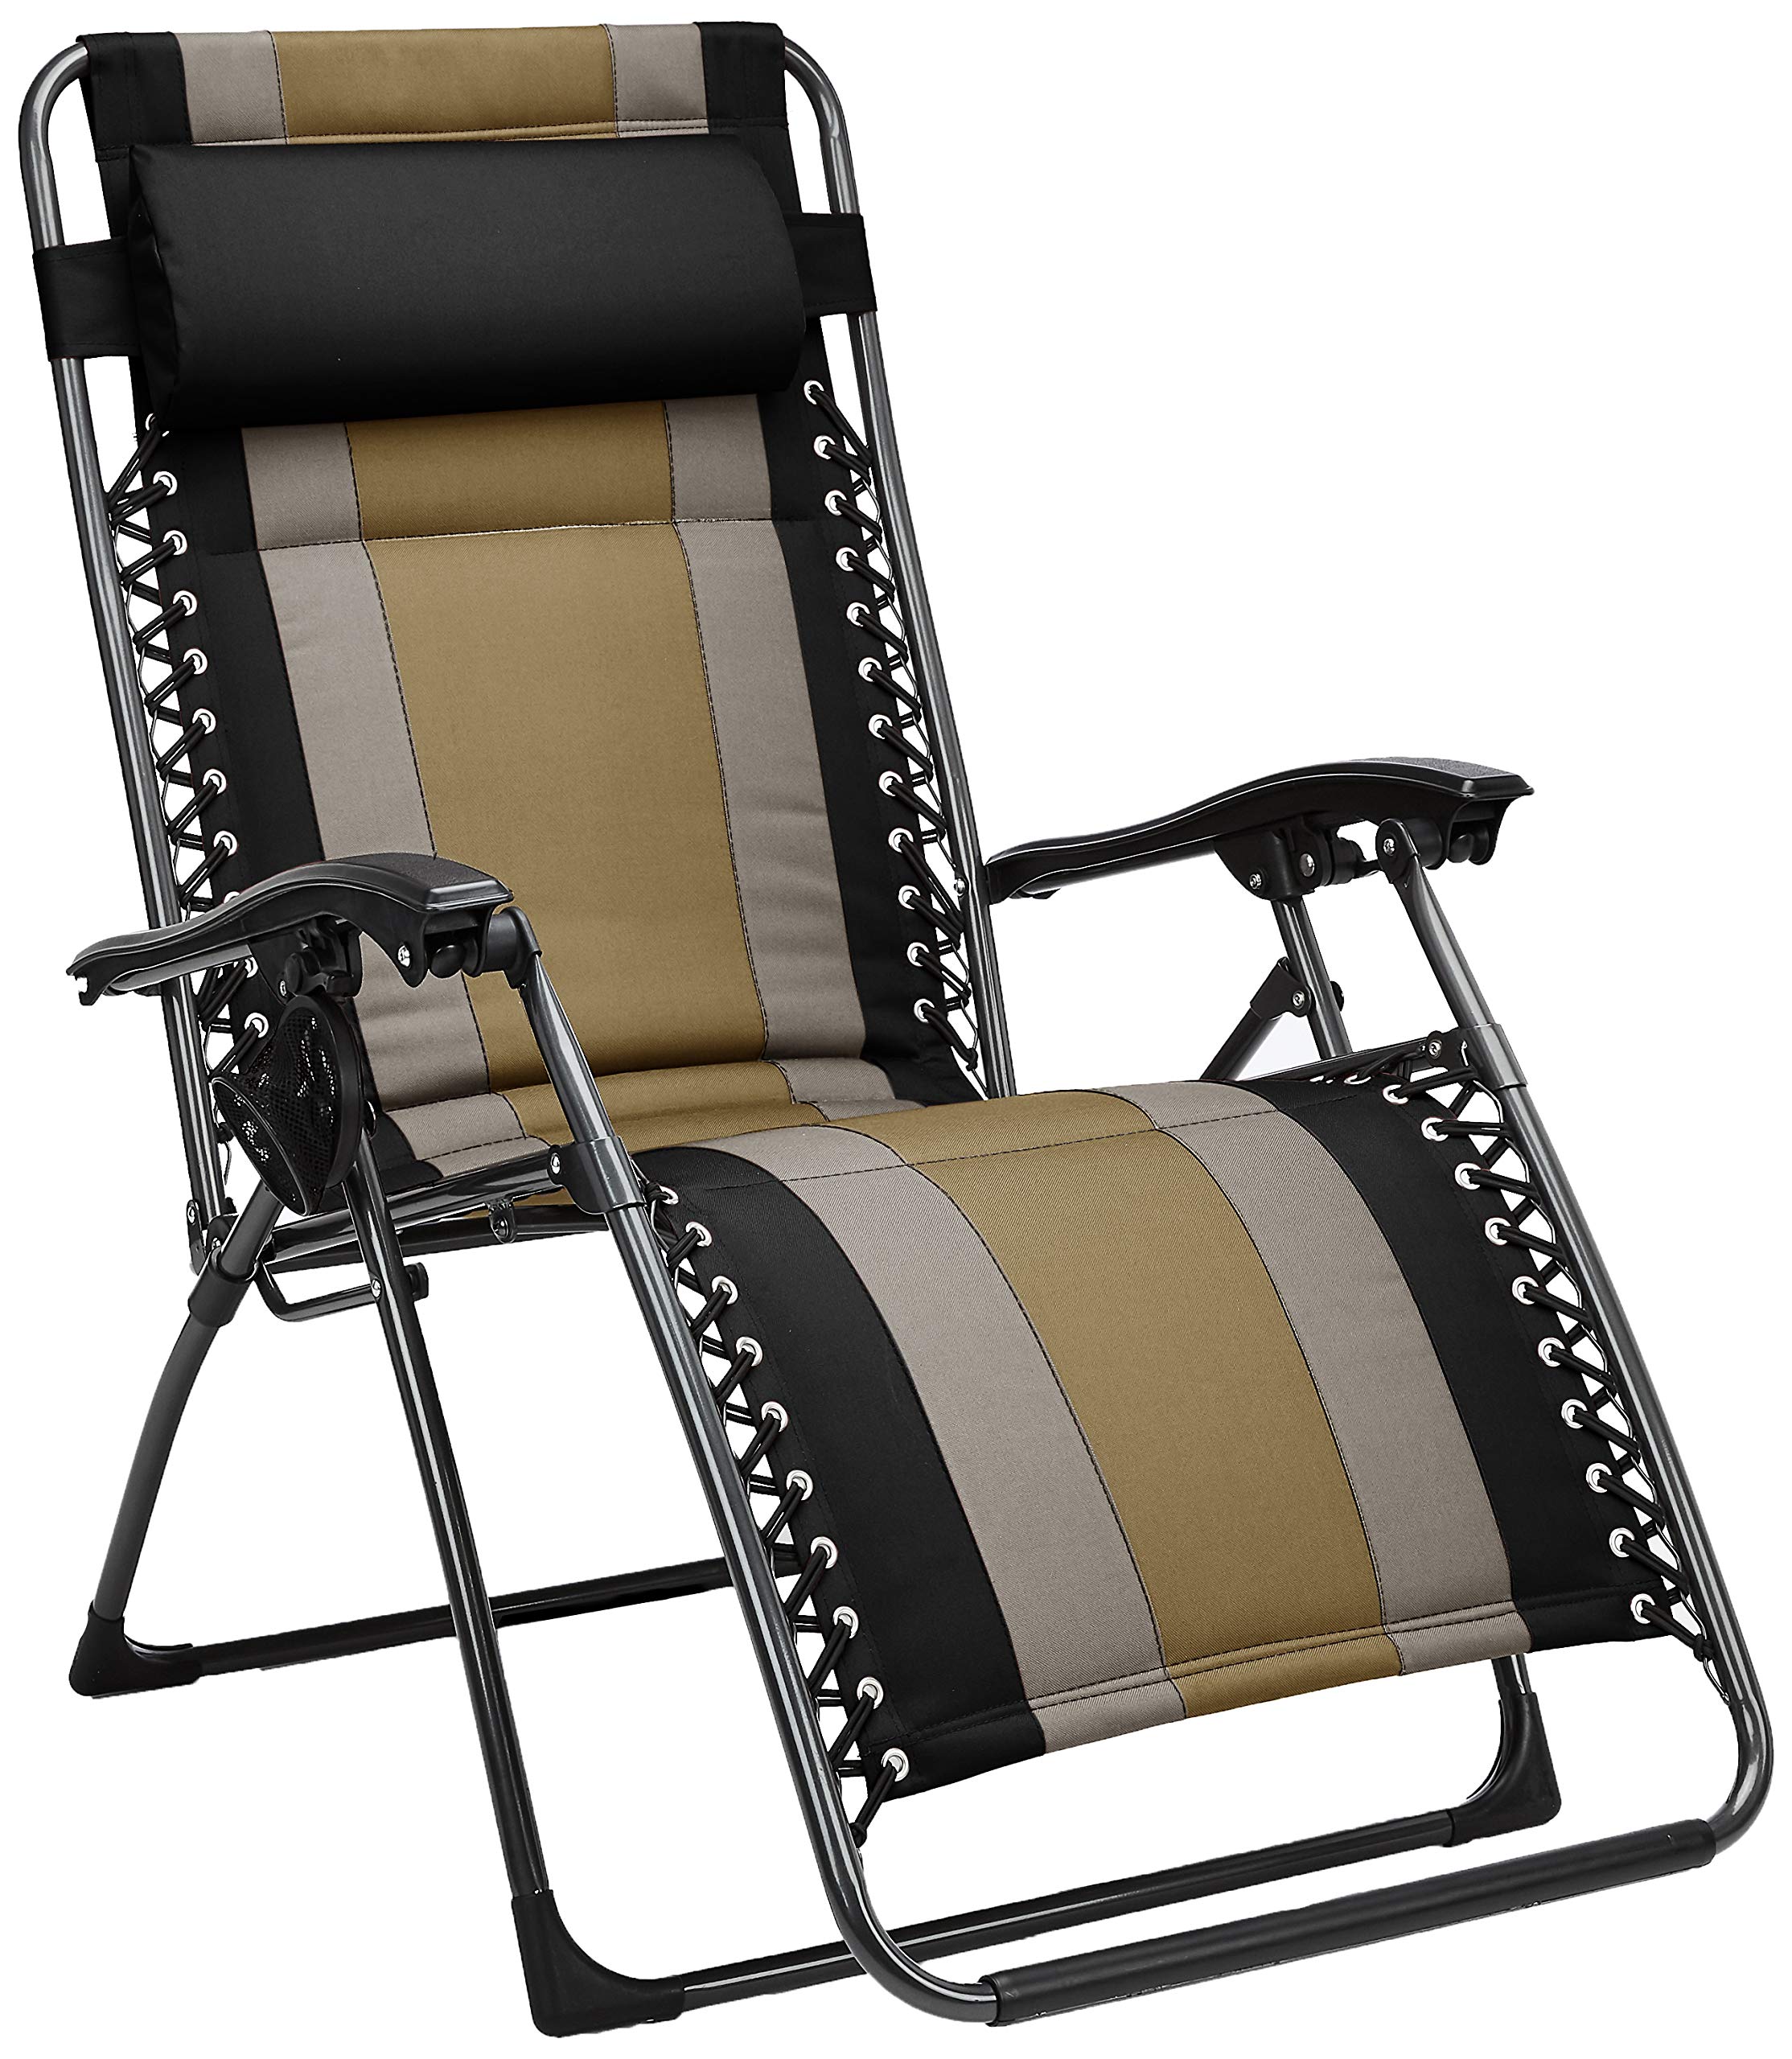 Amazon Basics Outdoor Padded Adjustable Zero Gravity Folding Reclining Lounge Chair with Pillow - Black - $27.50